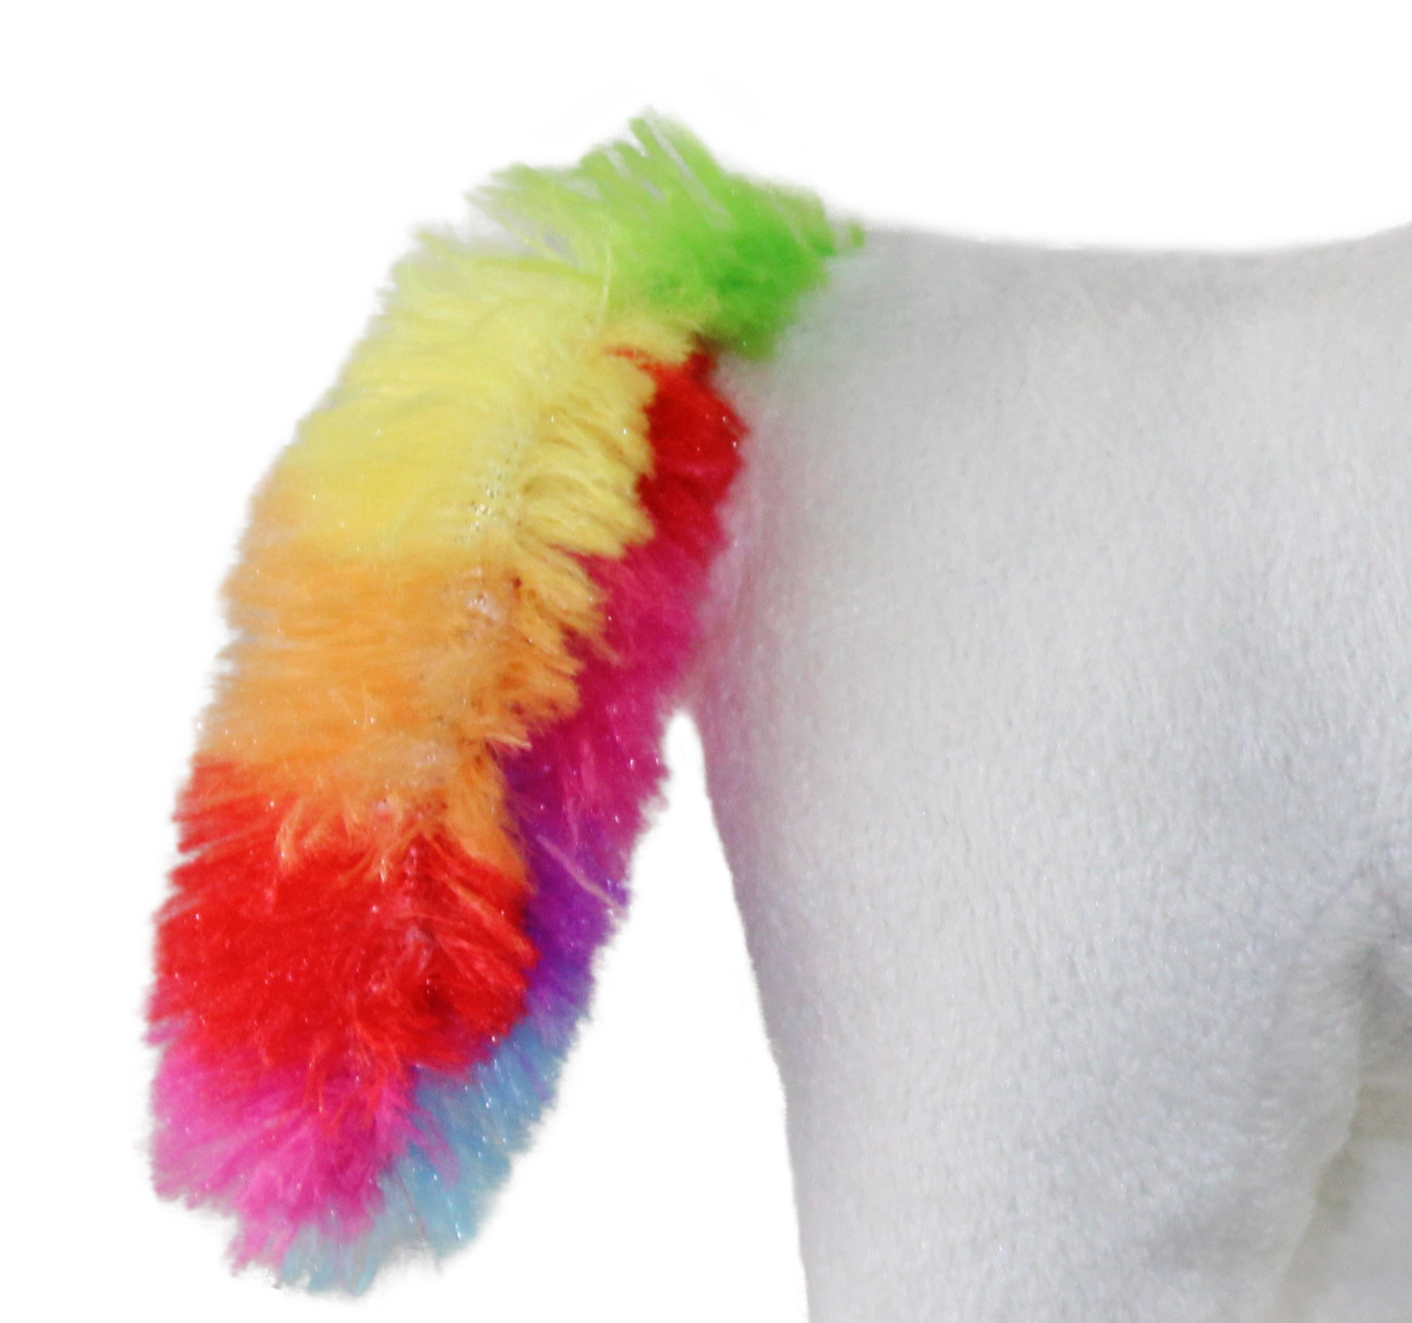 Plush Pal 11" Soft & Fluffy White Unicorn Stuffed Animal Toy with Rainbow Tail And Mane - image 2 of 5